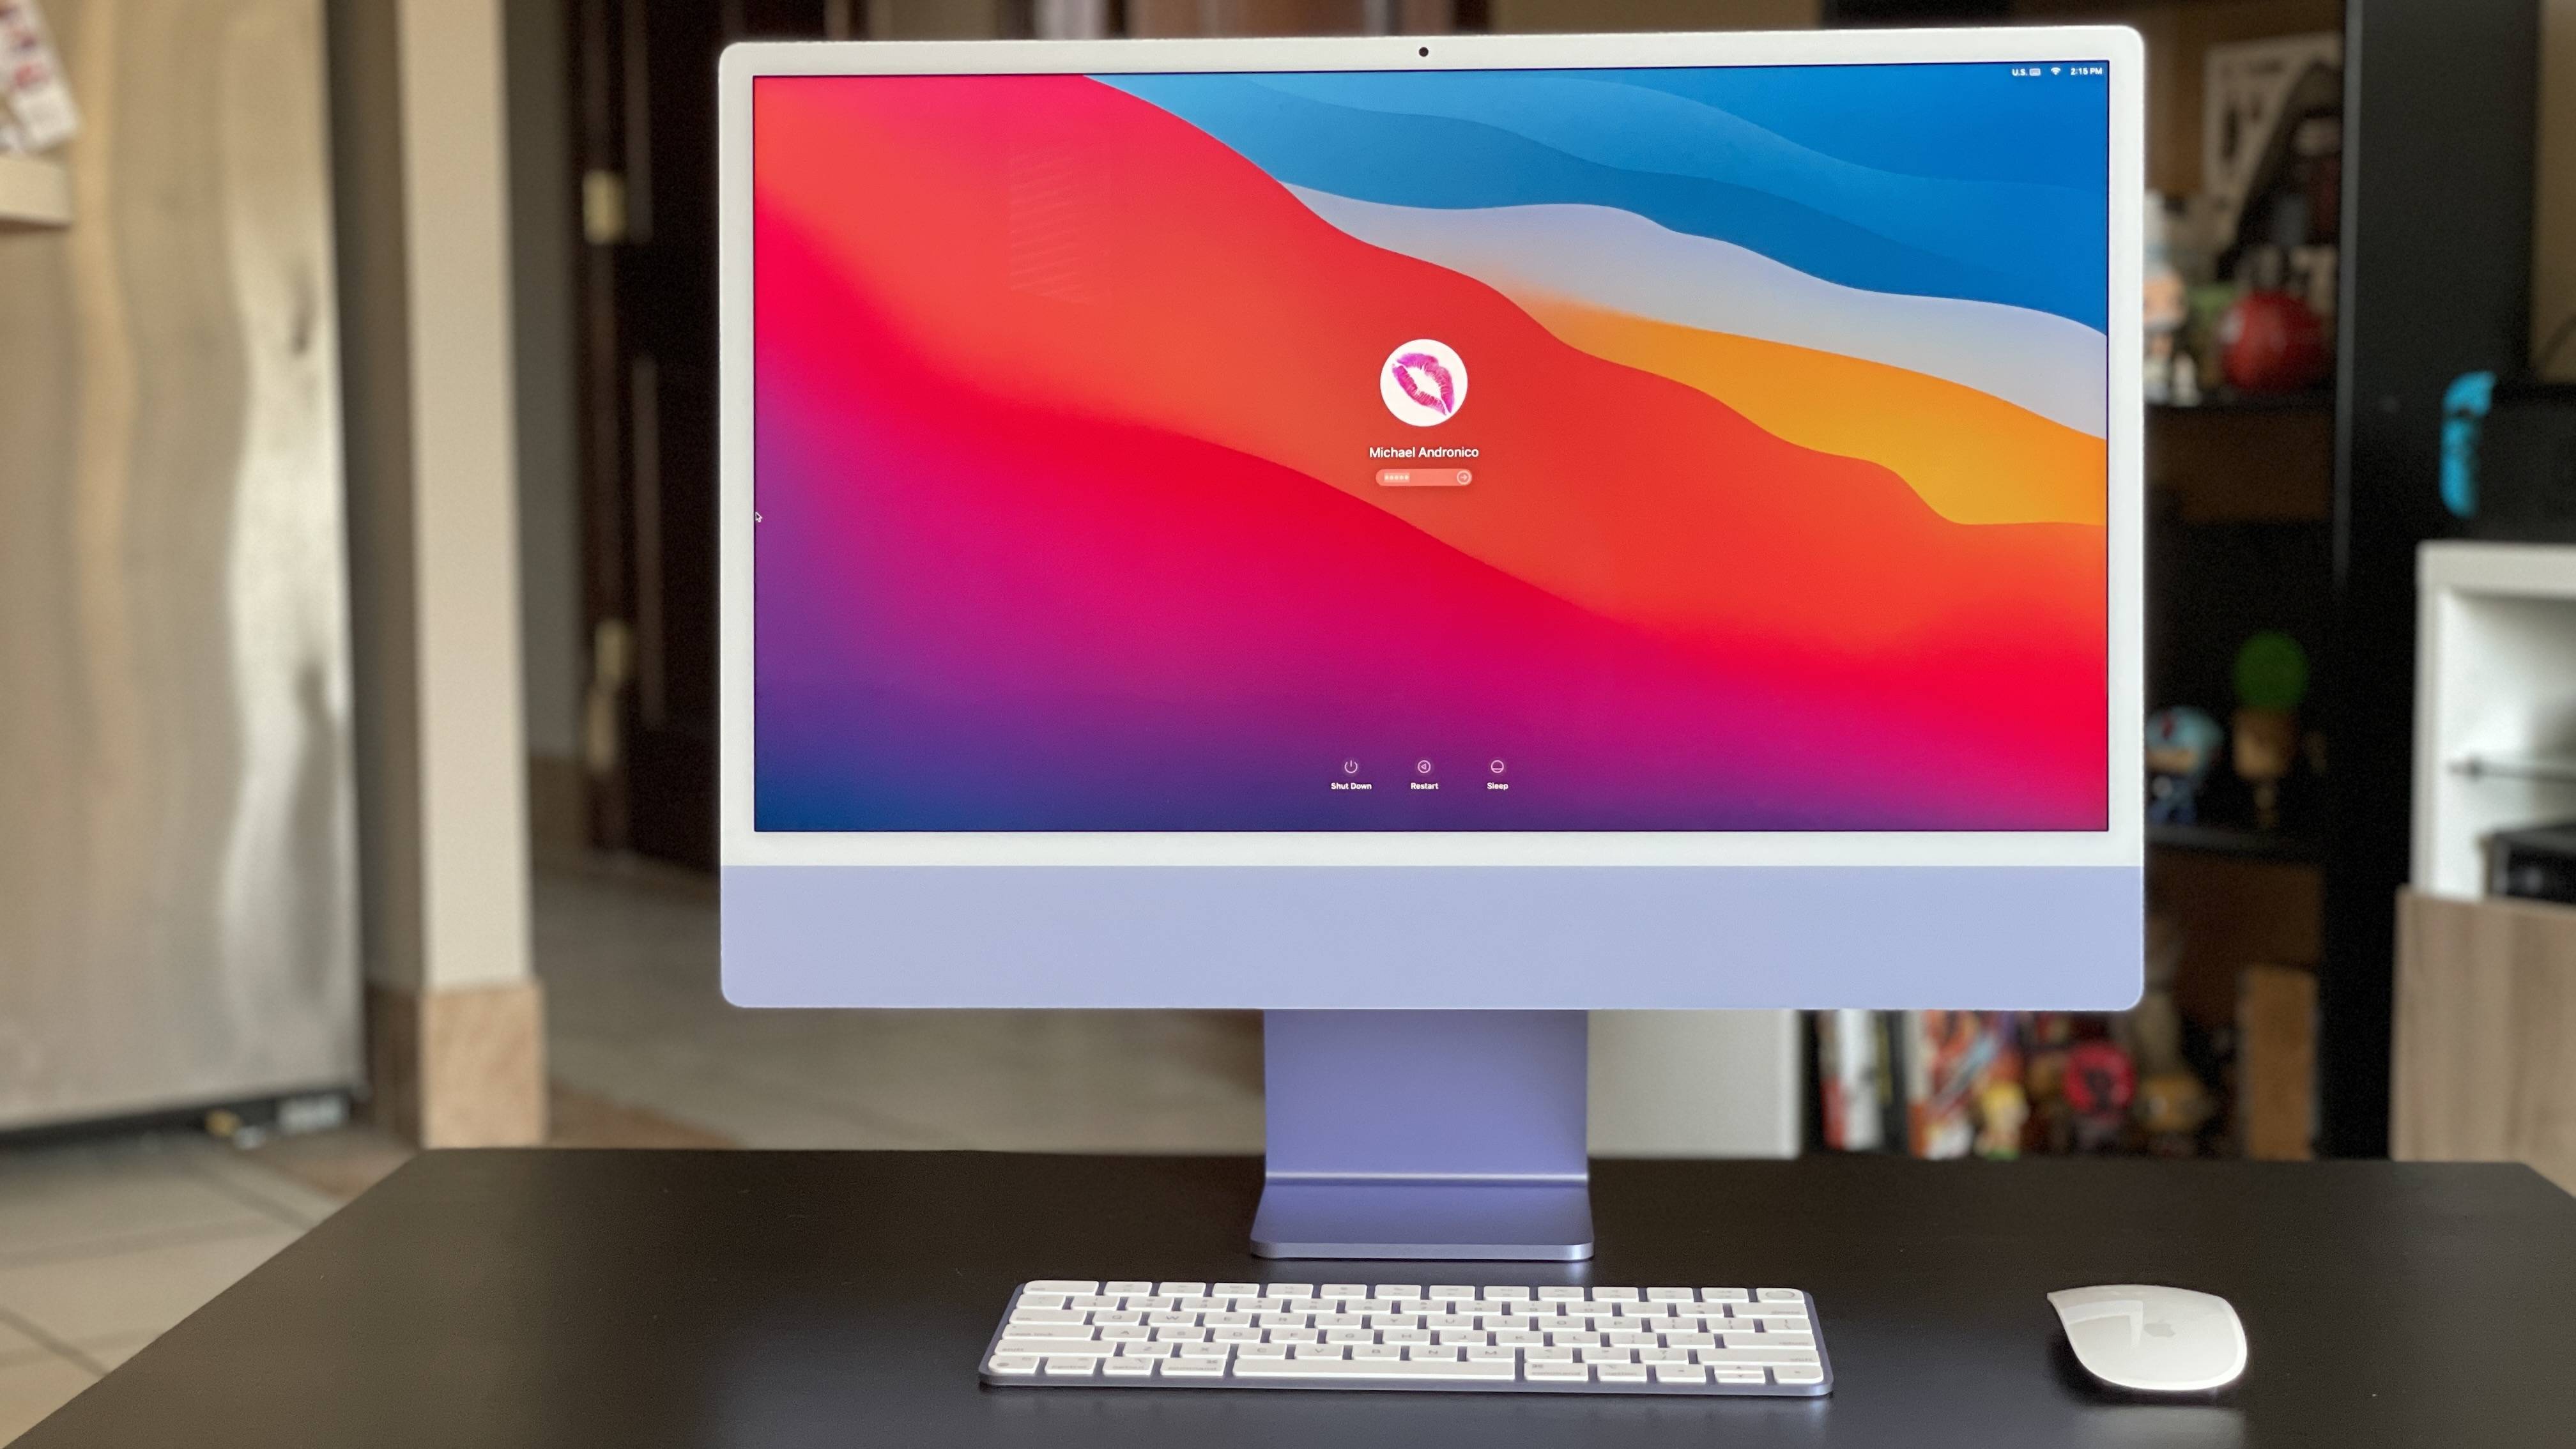 iMac pros cons: desktop compares to a PC | CNN Underscored